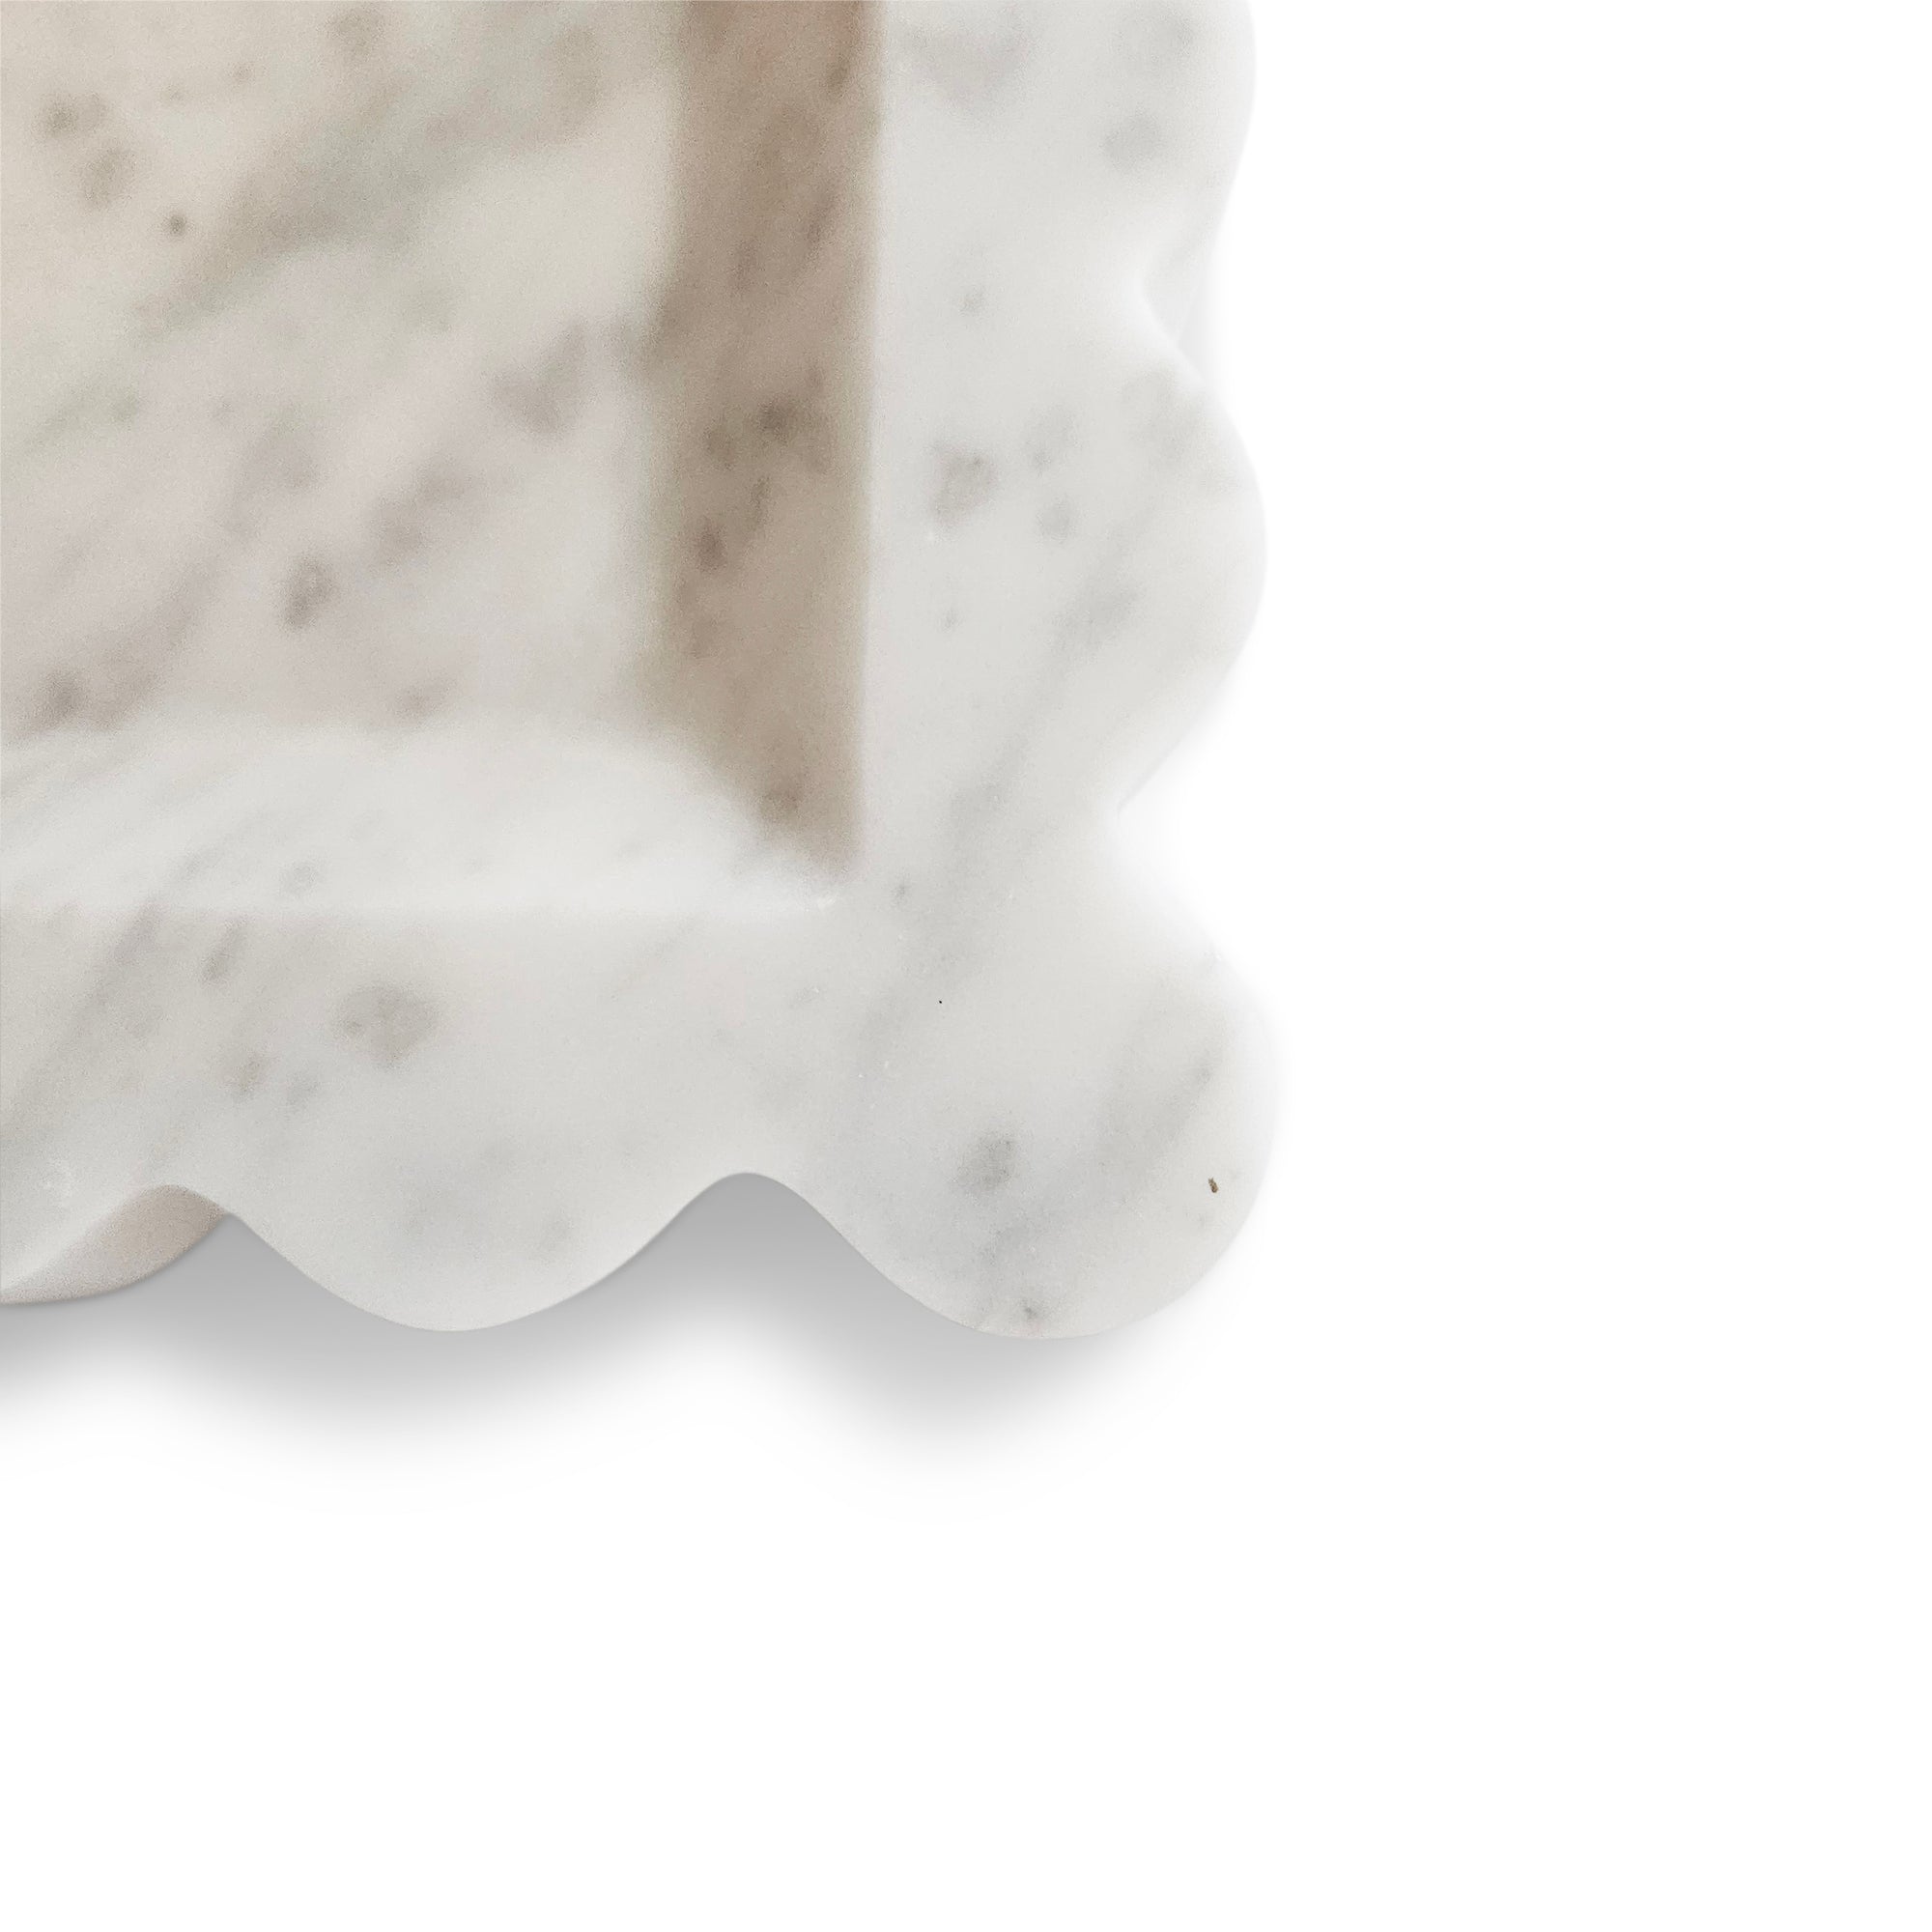 white carrera marble scalloped tray